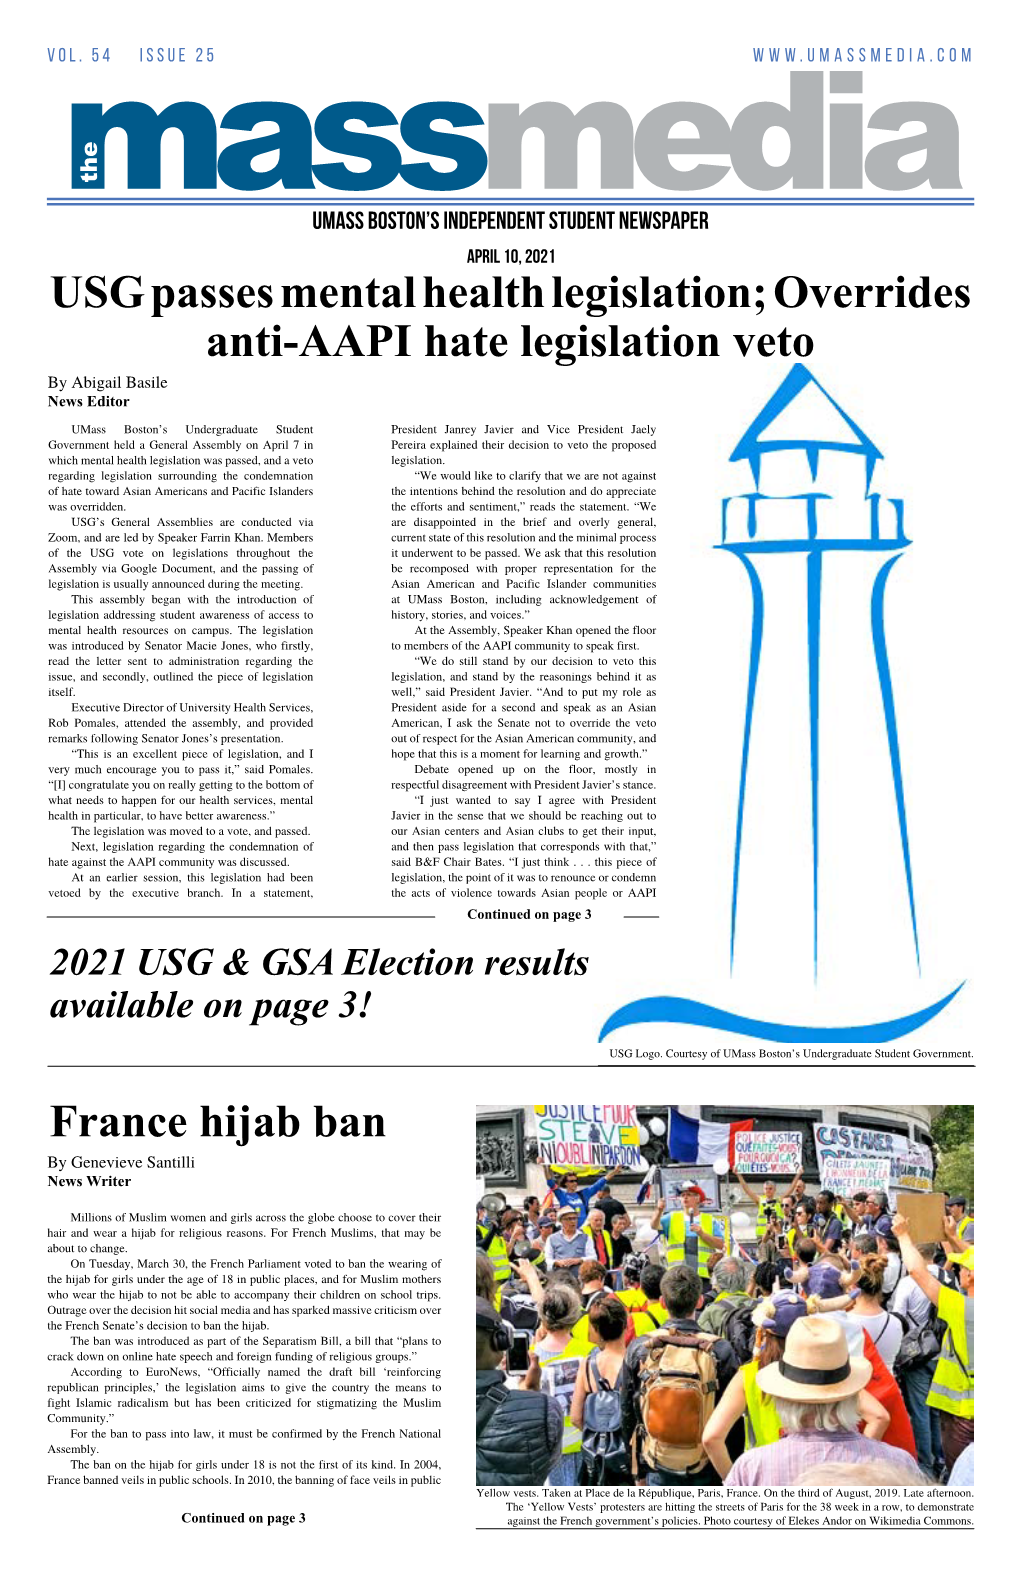 USG Passes Mental Health Legislation; Overrides Anti-AAPI Hate Legislation Veto by Abigail Basile News Editor